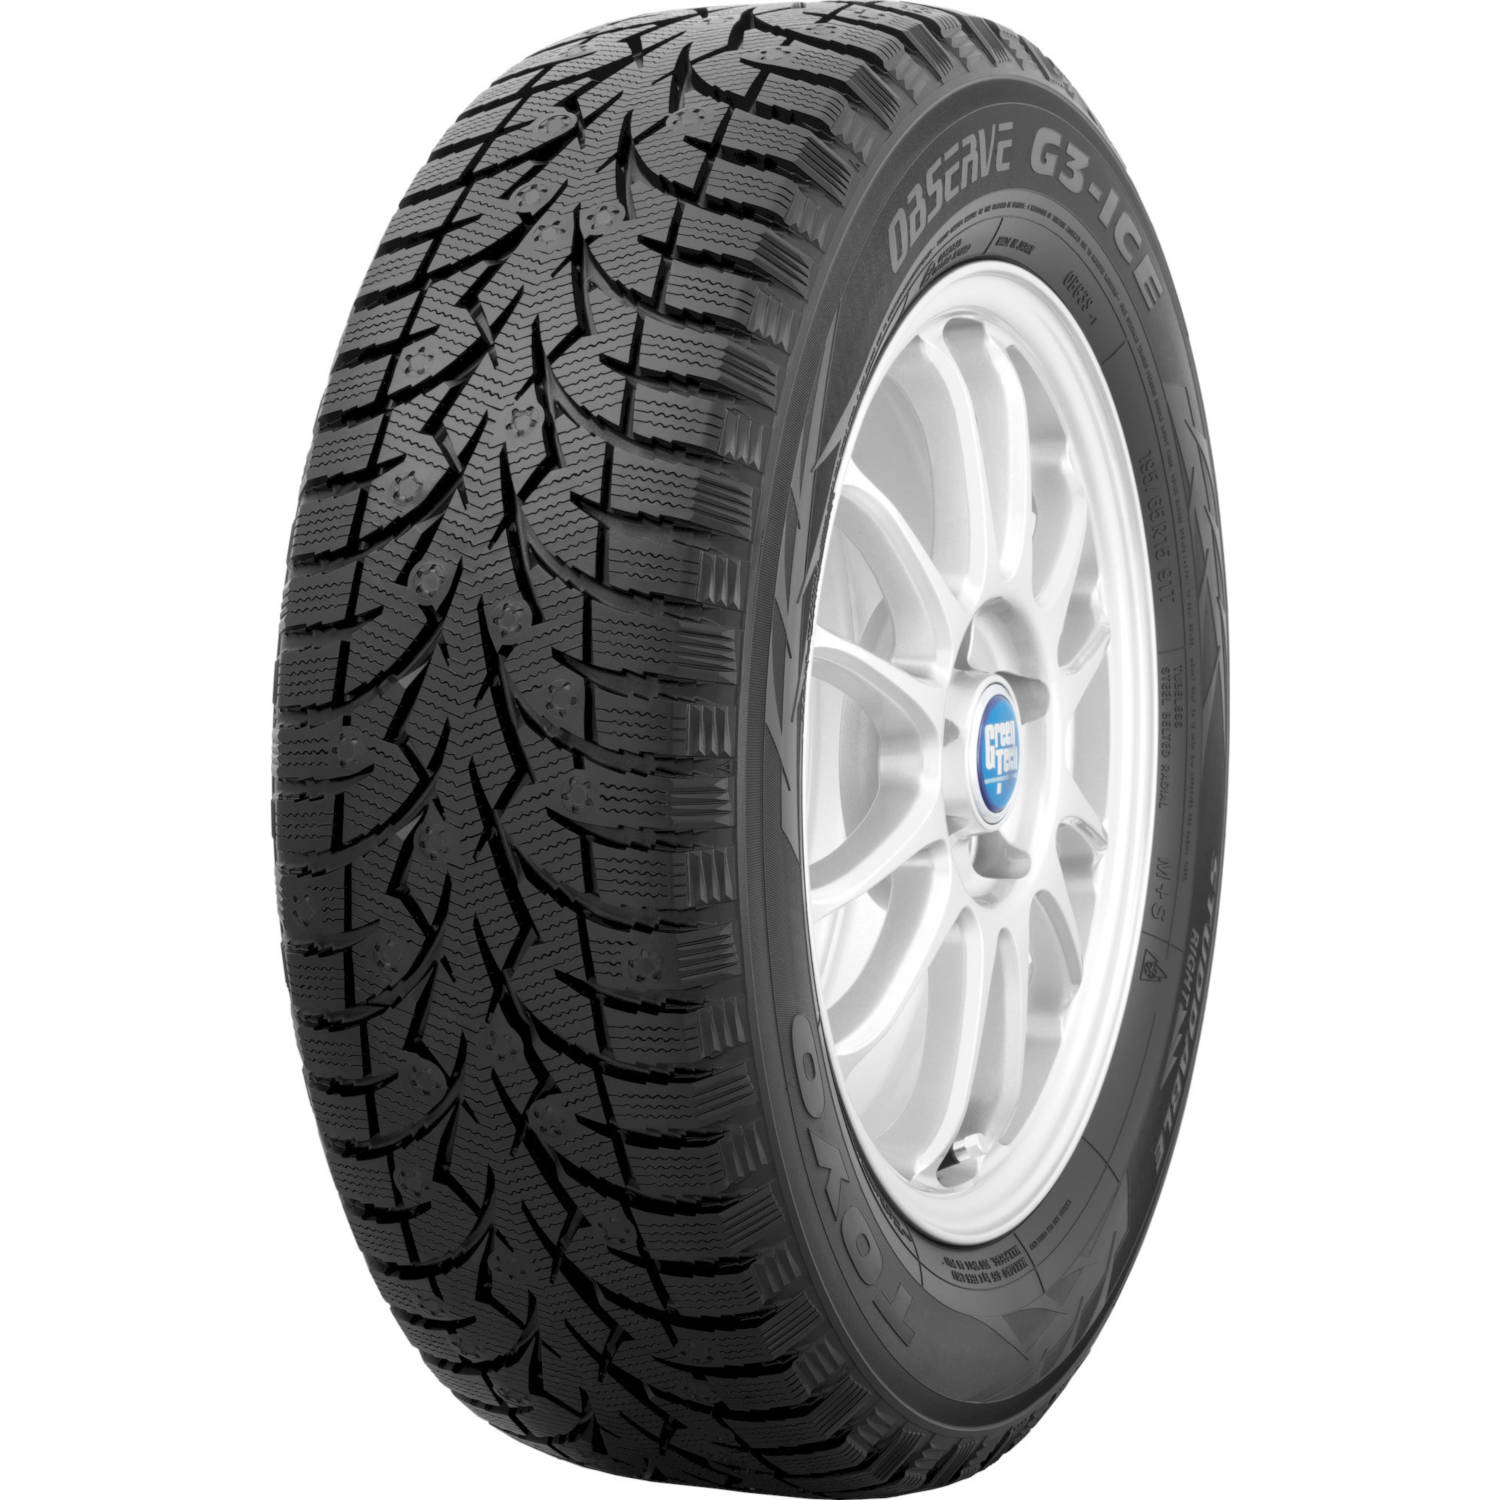 TOYO TIRES OBSERVE G3 ICE 225/65R17XL (28.5X8.9R 17) Tires